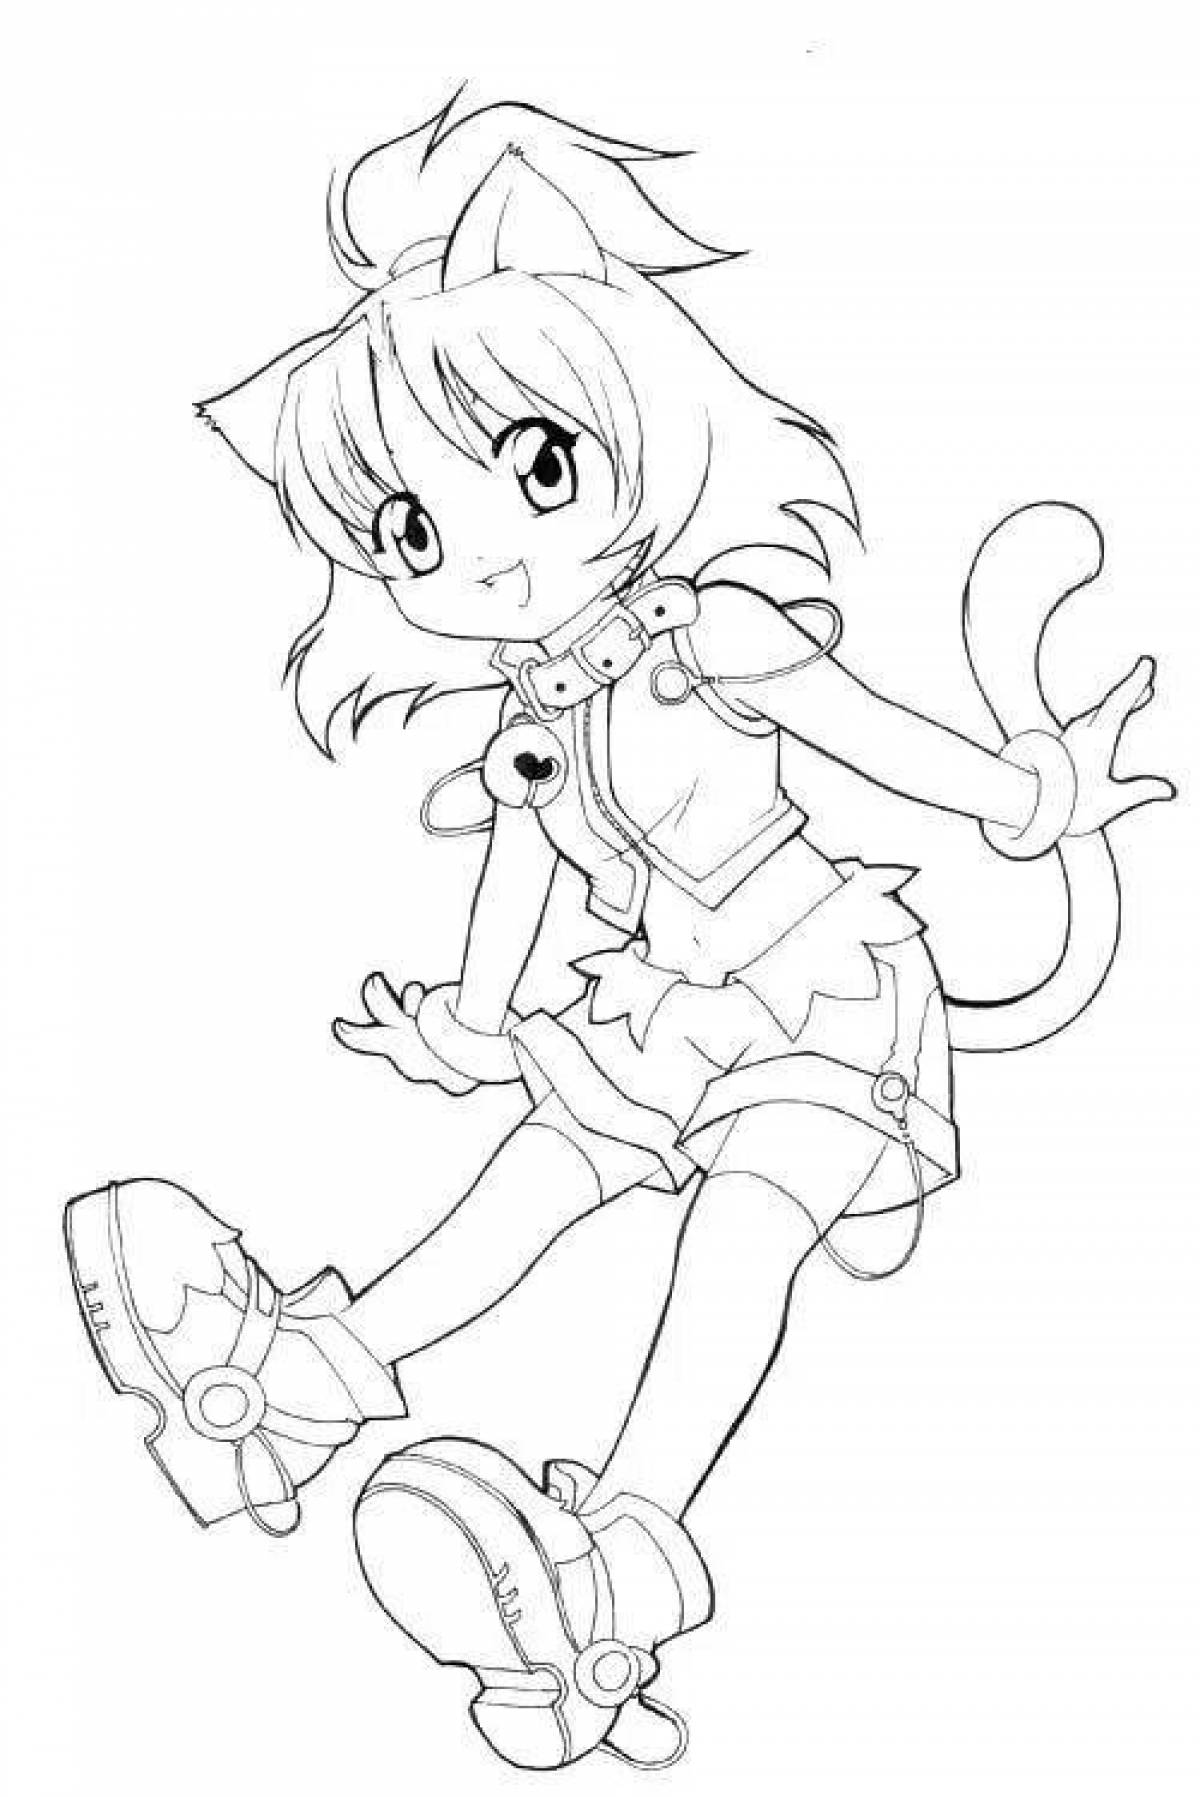 Lovely coloring cat anime girl